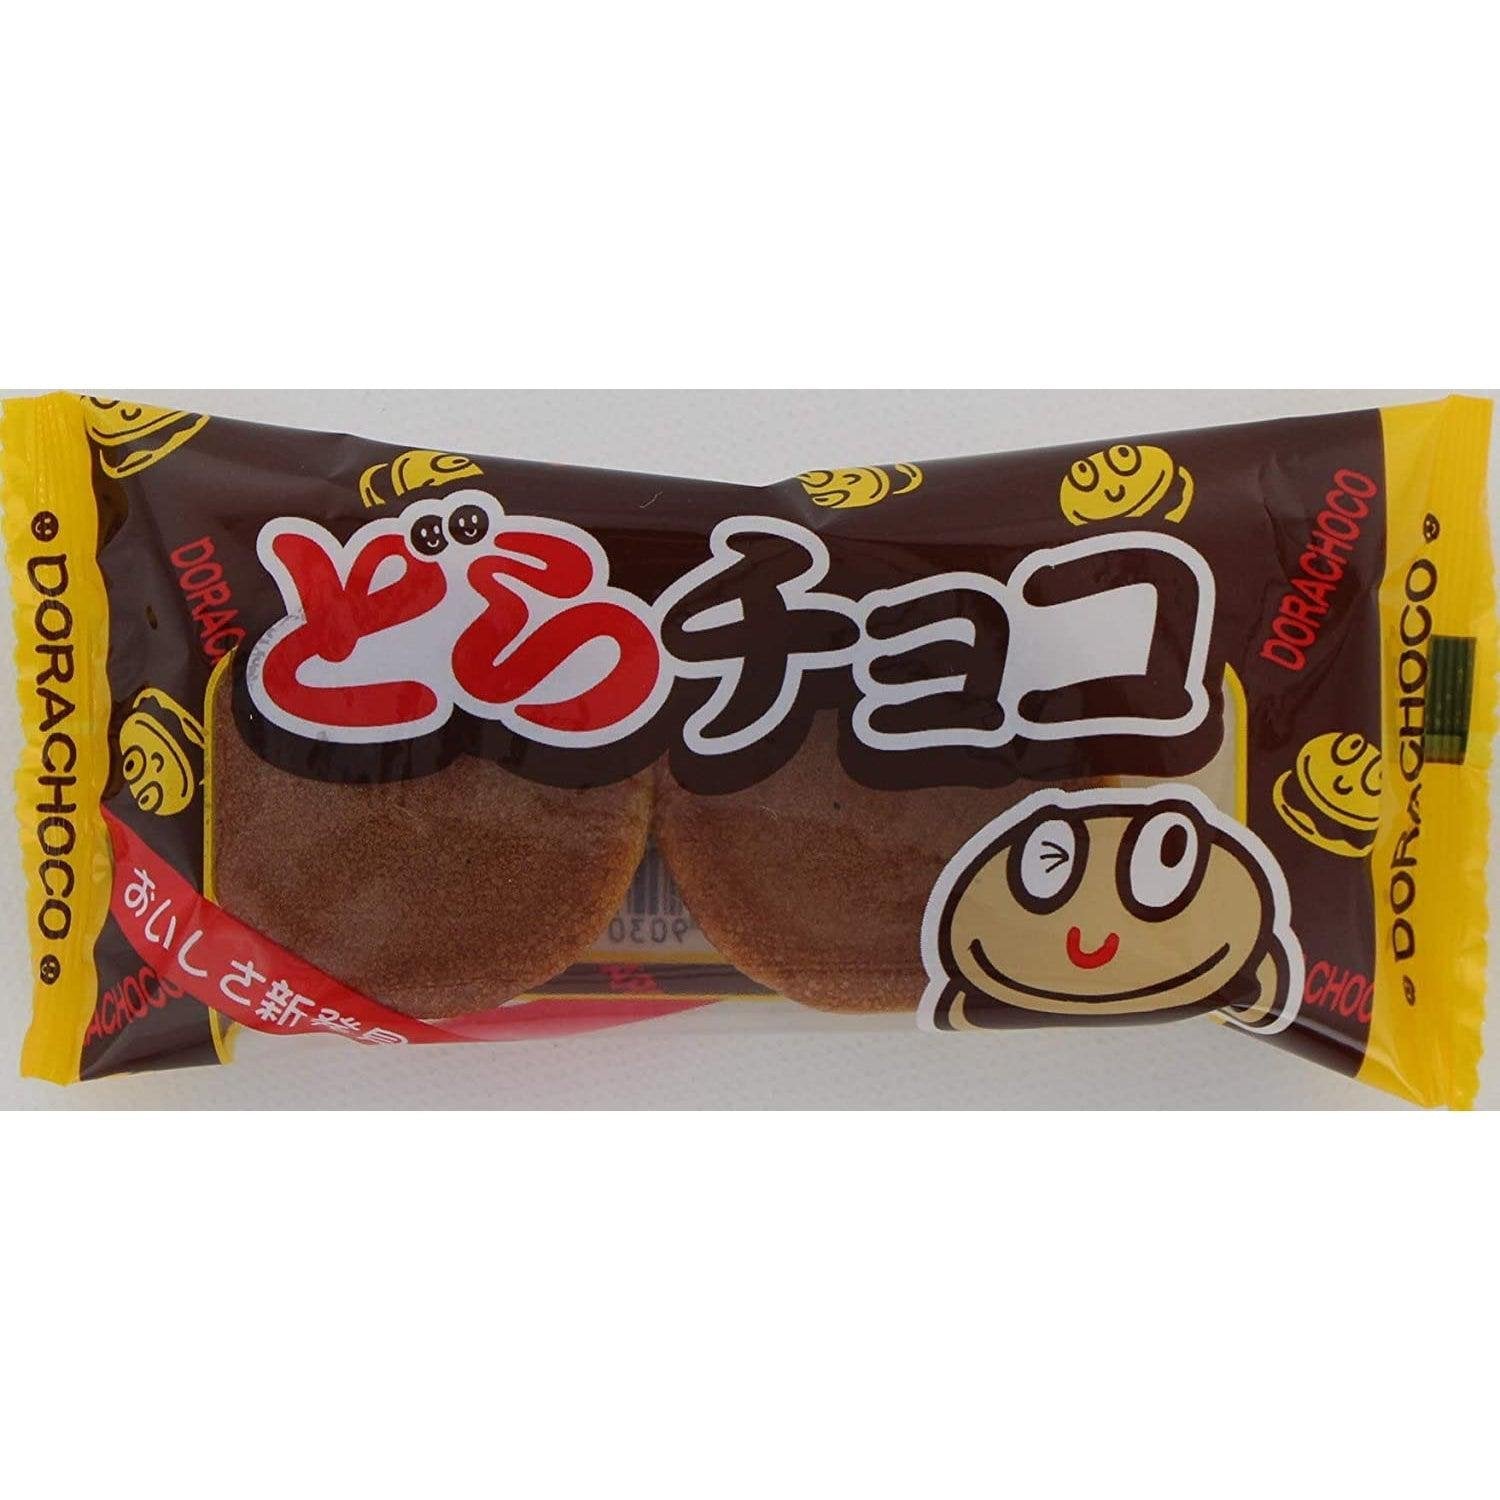 Yaokin Dorachoco Chocolate Dorayaki Snack (Box of 20 Packs)